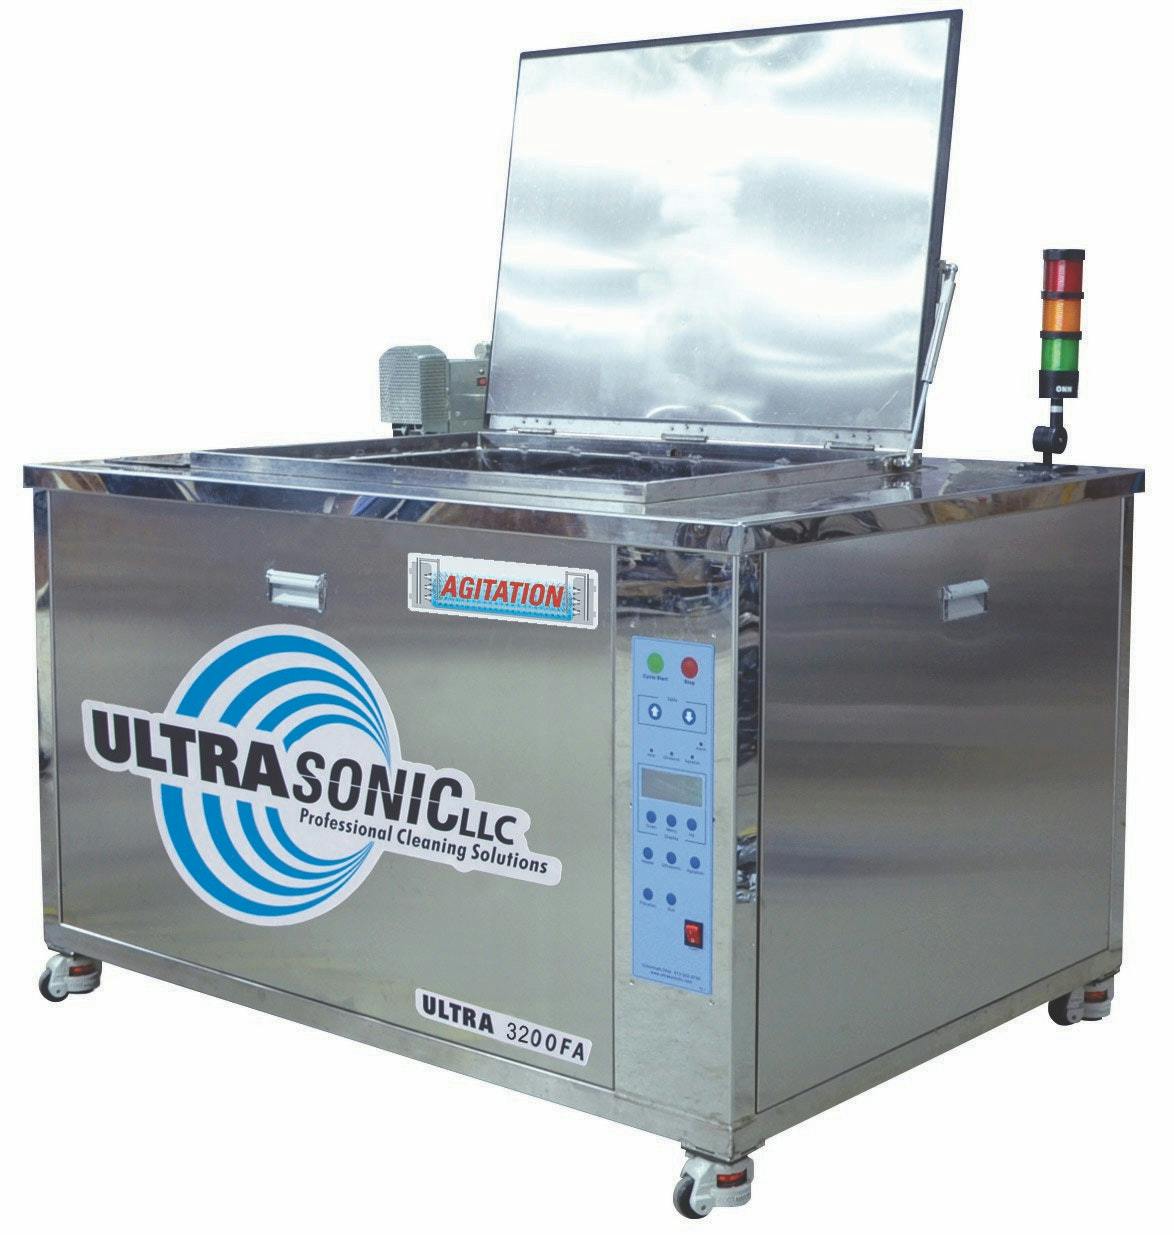 Ultrasonic LLC Introduces 65-Gallon Ultrasonic Cleaner